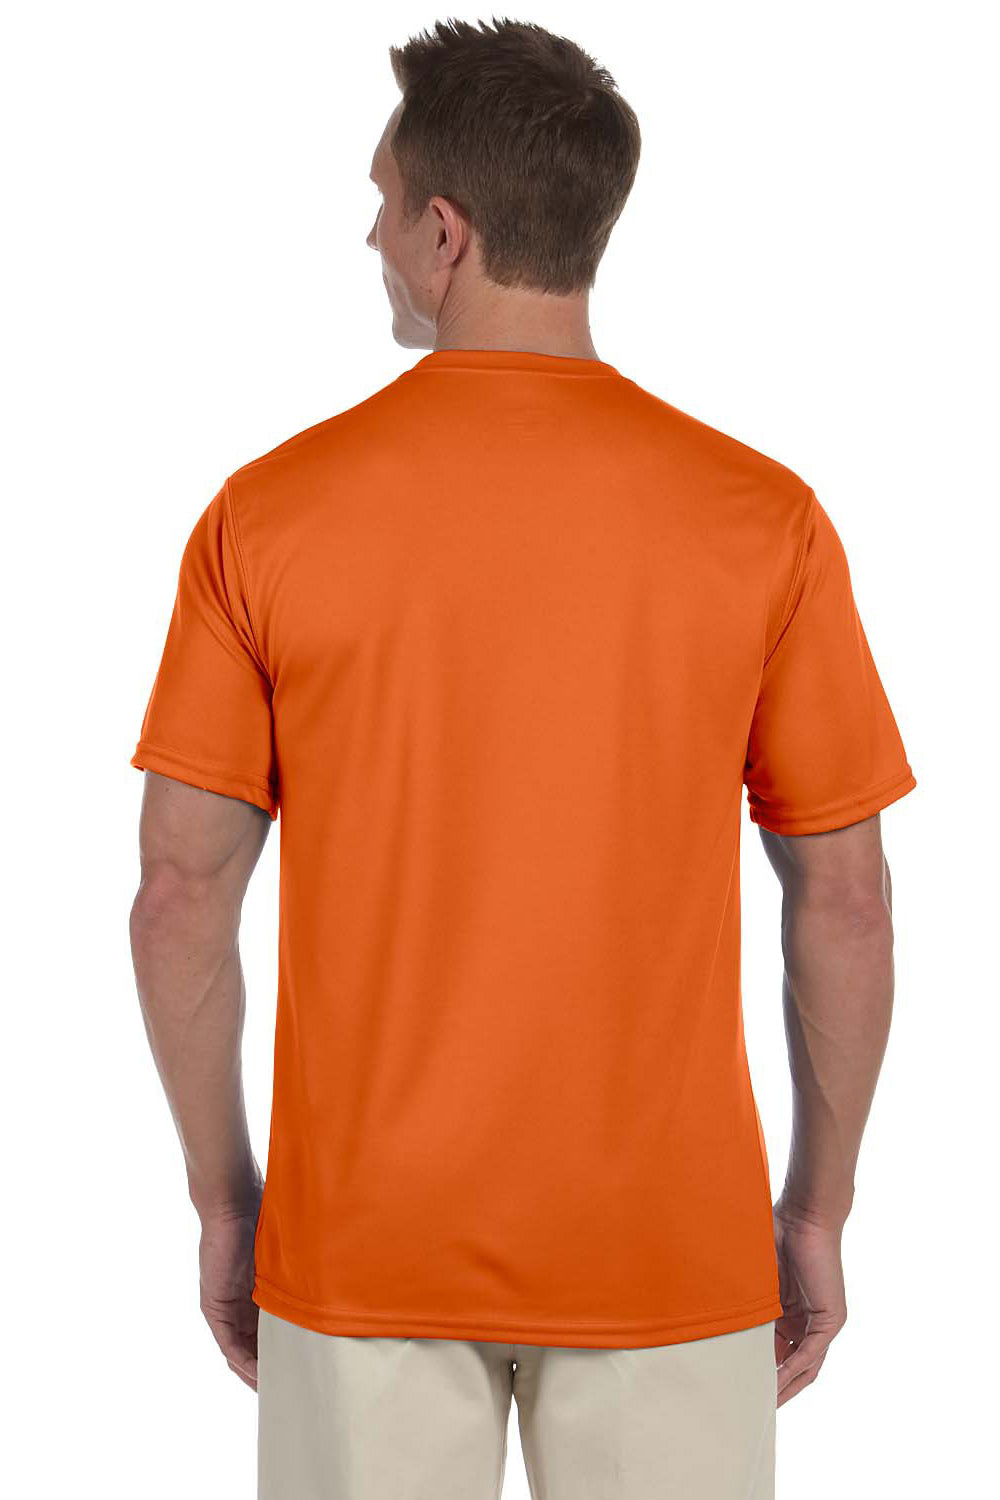 Augusta Sportswear 790 Mens Moisture Wicking Short Sleeve Crewneck T-Shirt Orange Model Back